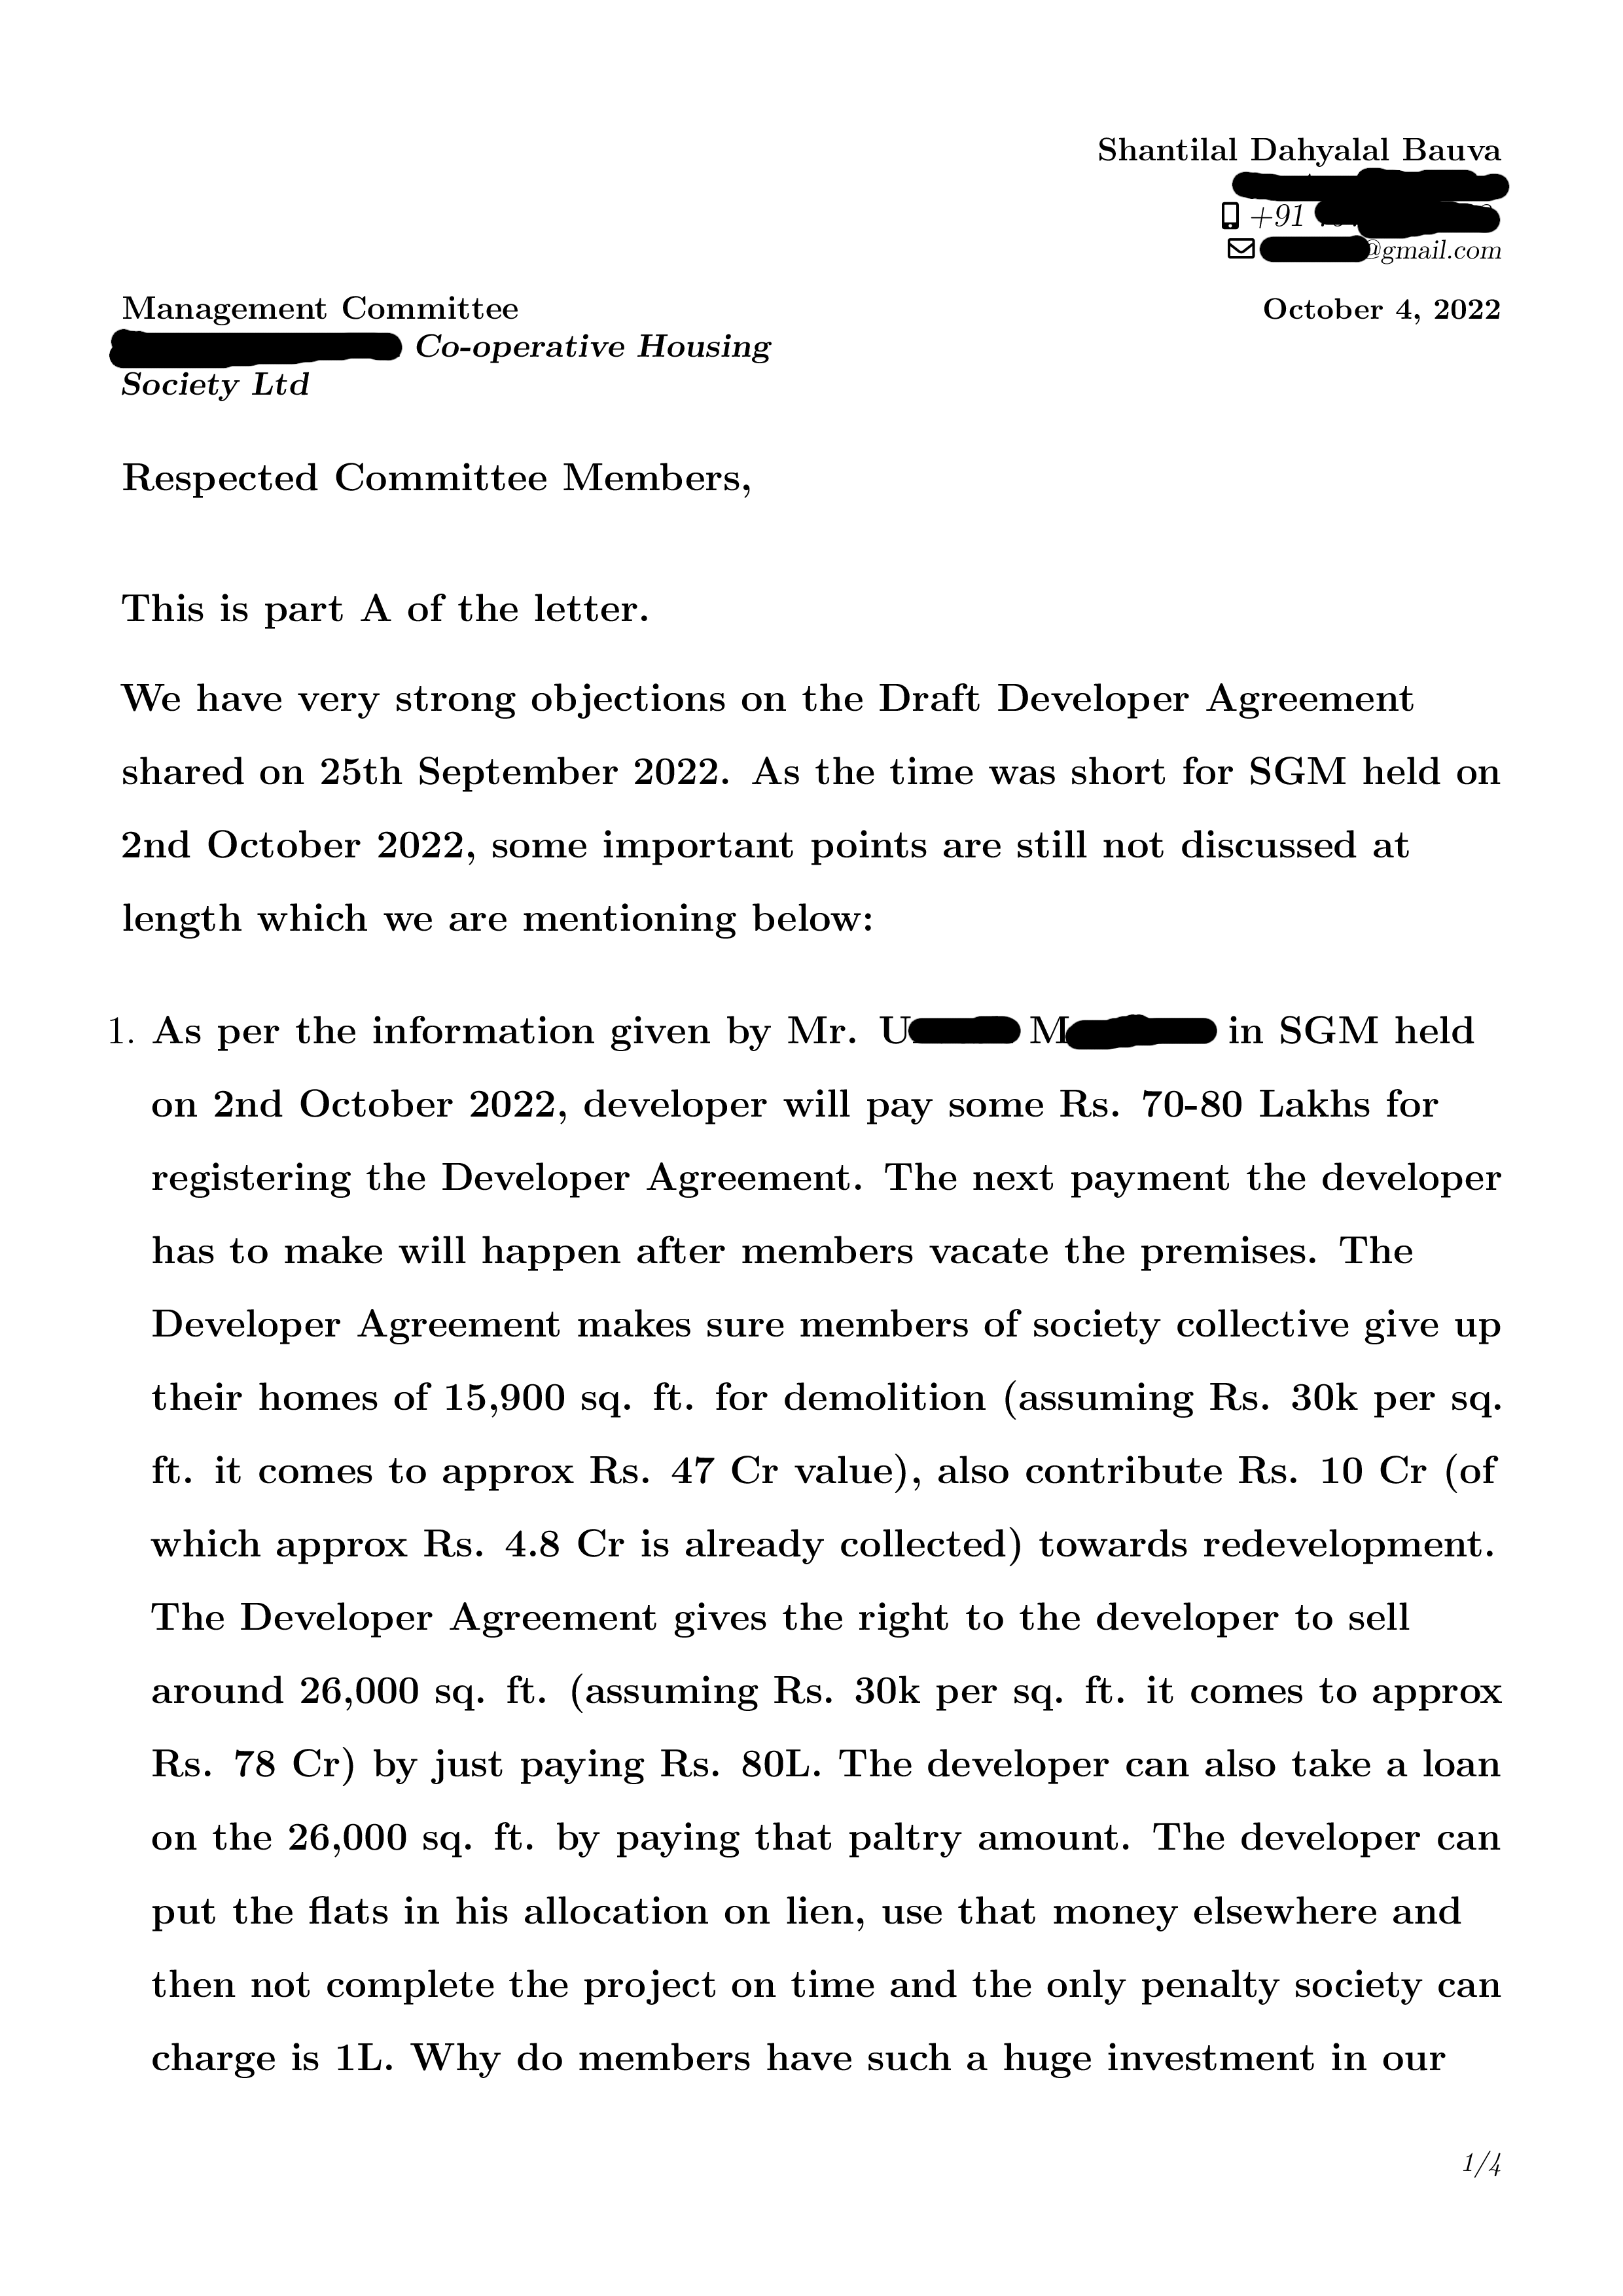 Letter explaining the shitty deal